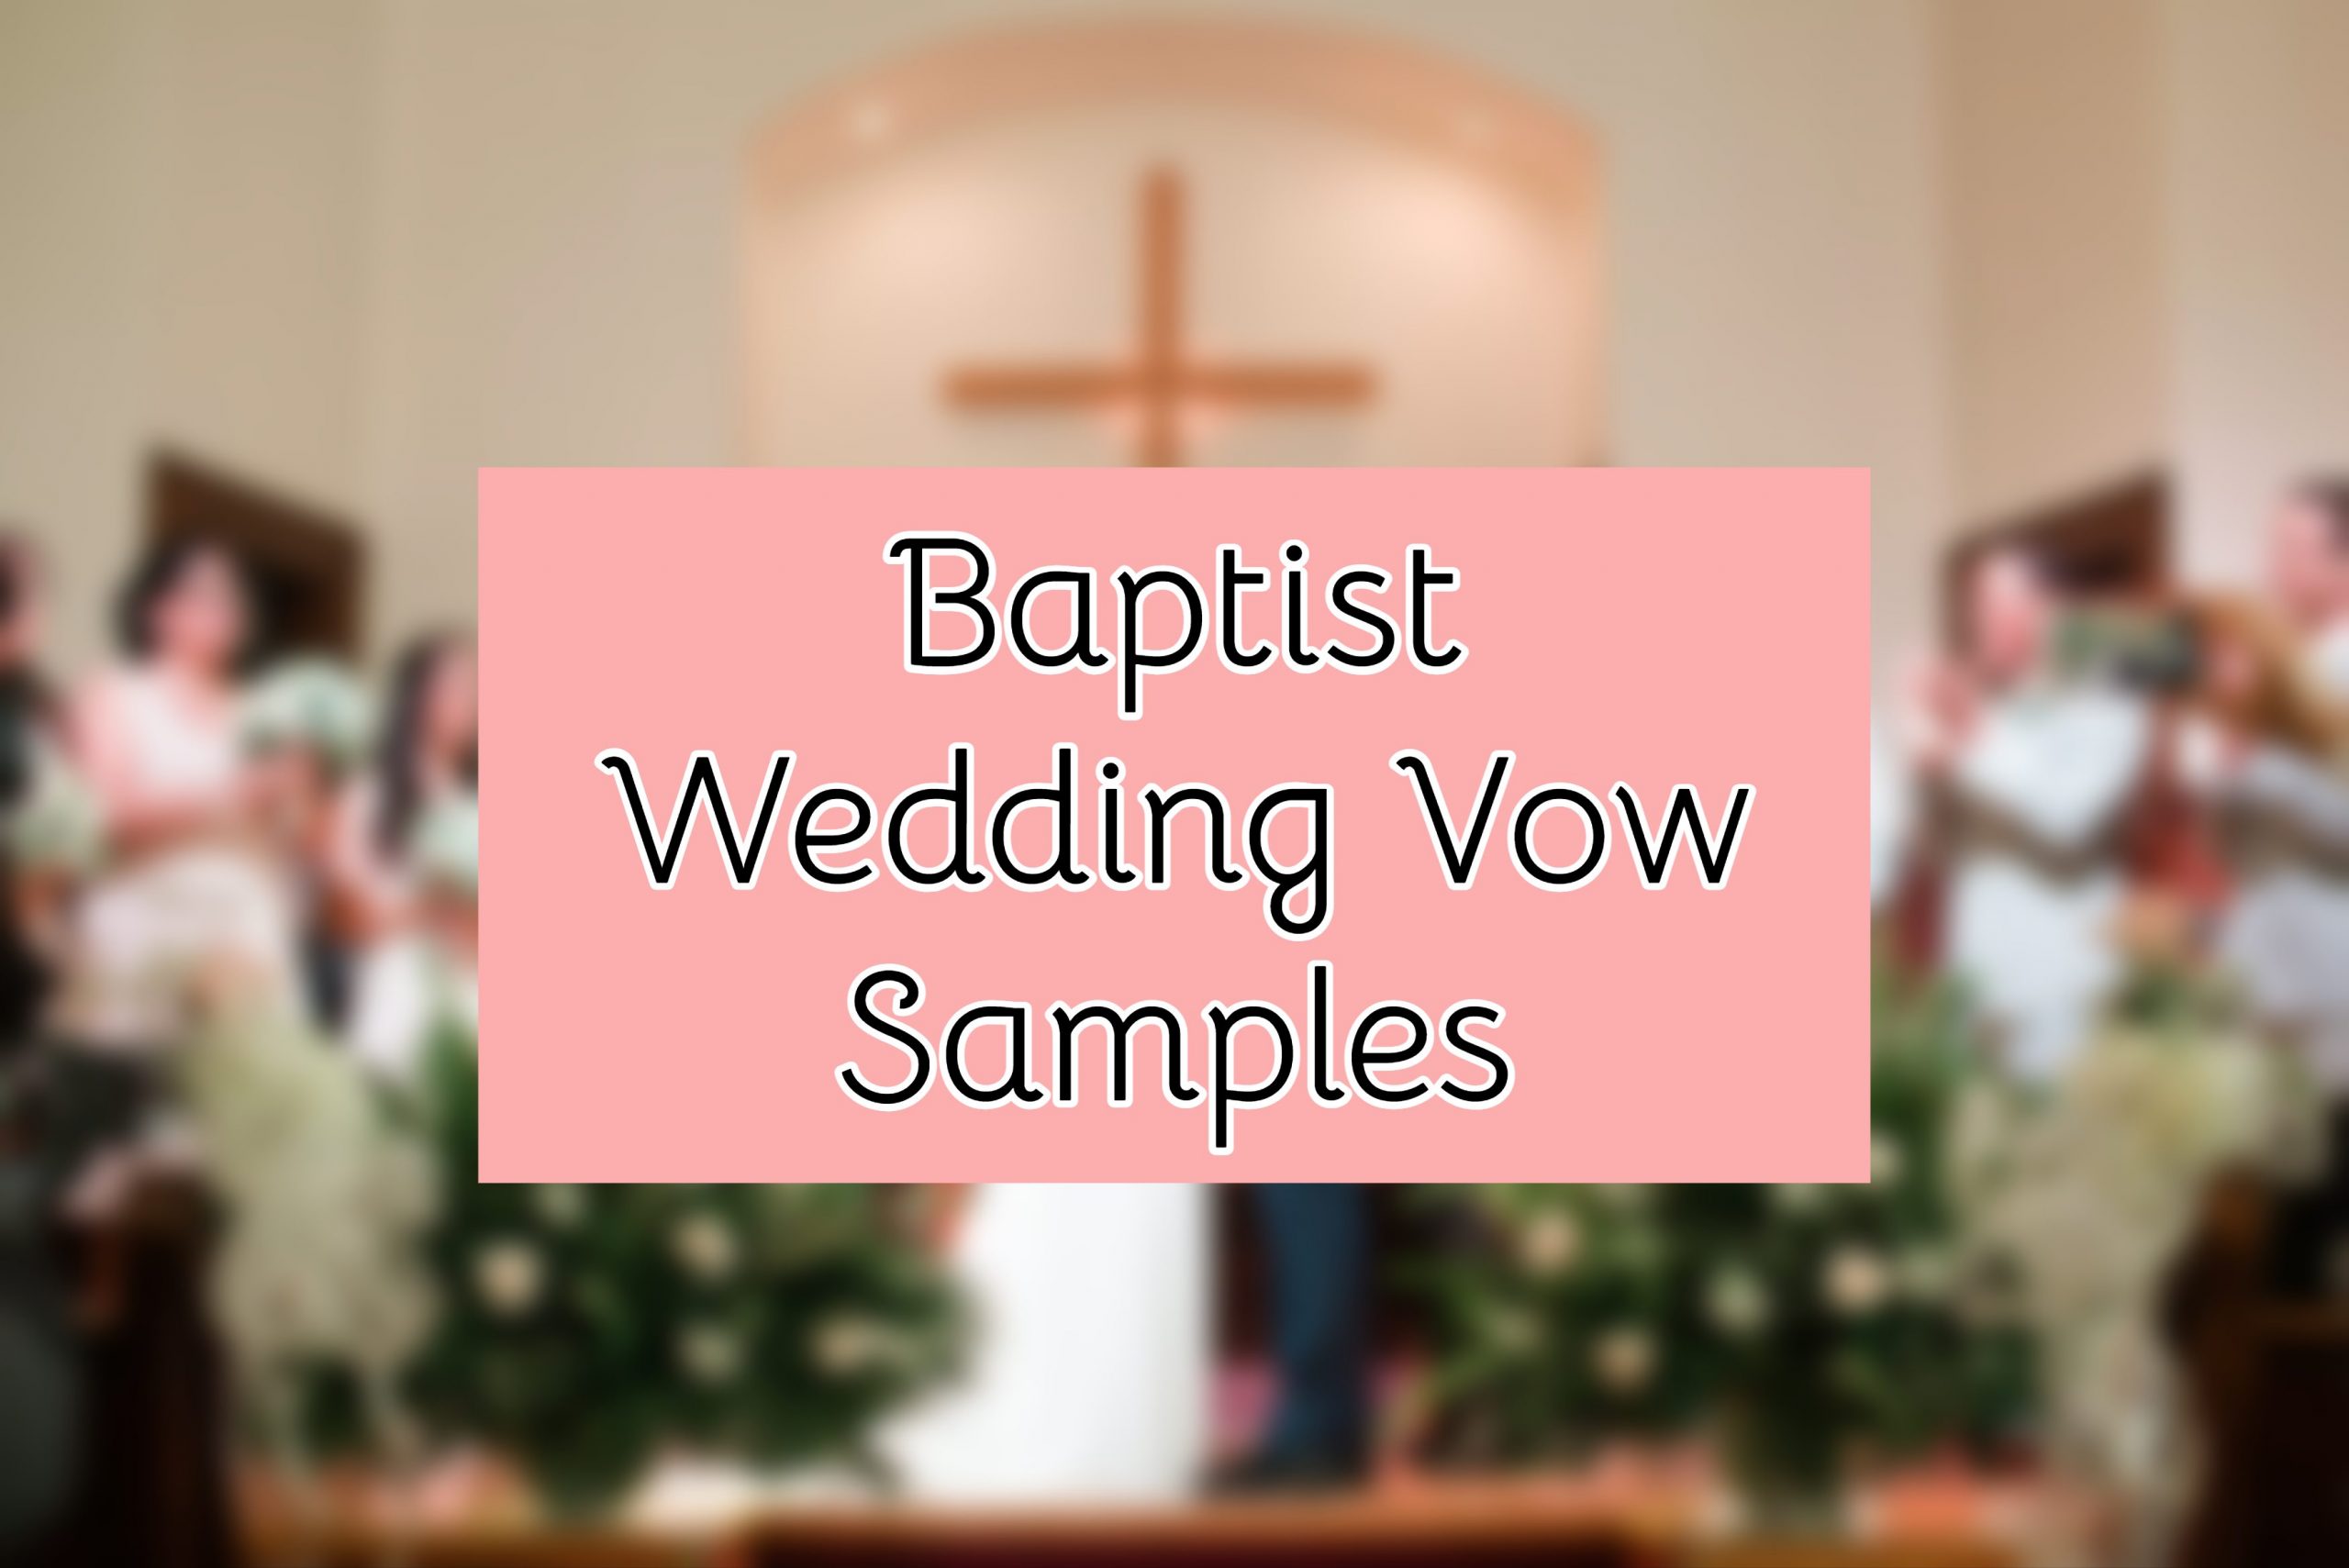 Baptist Wedding Vow Samples